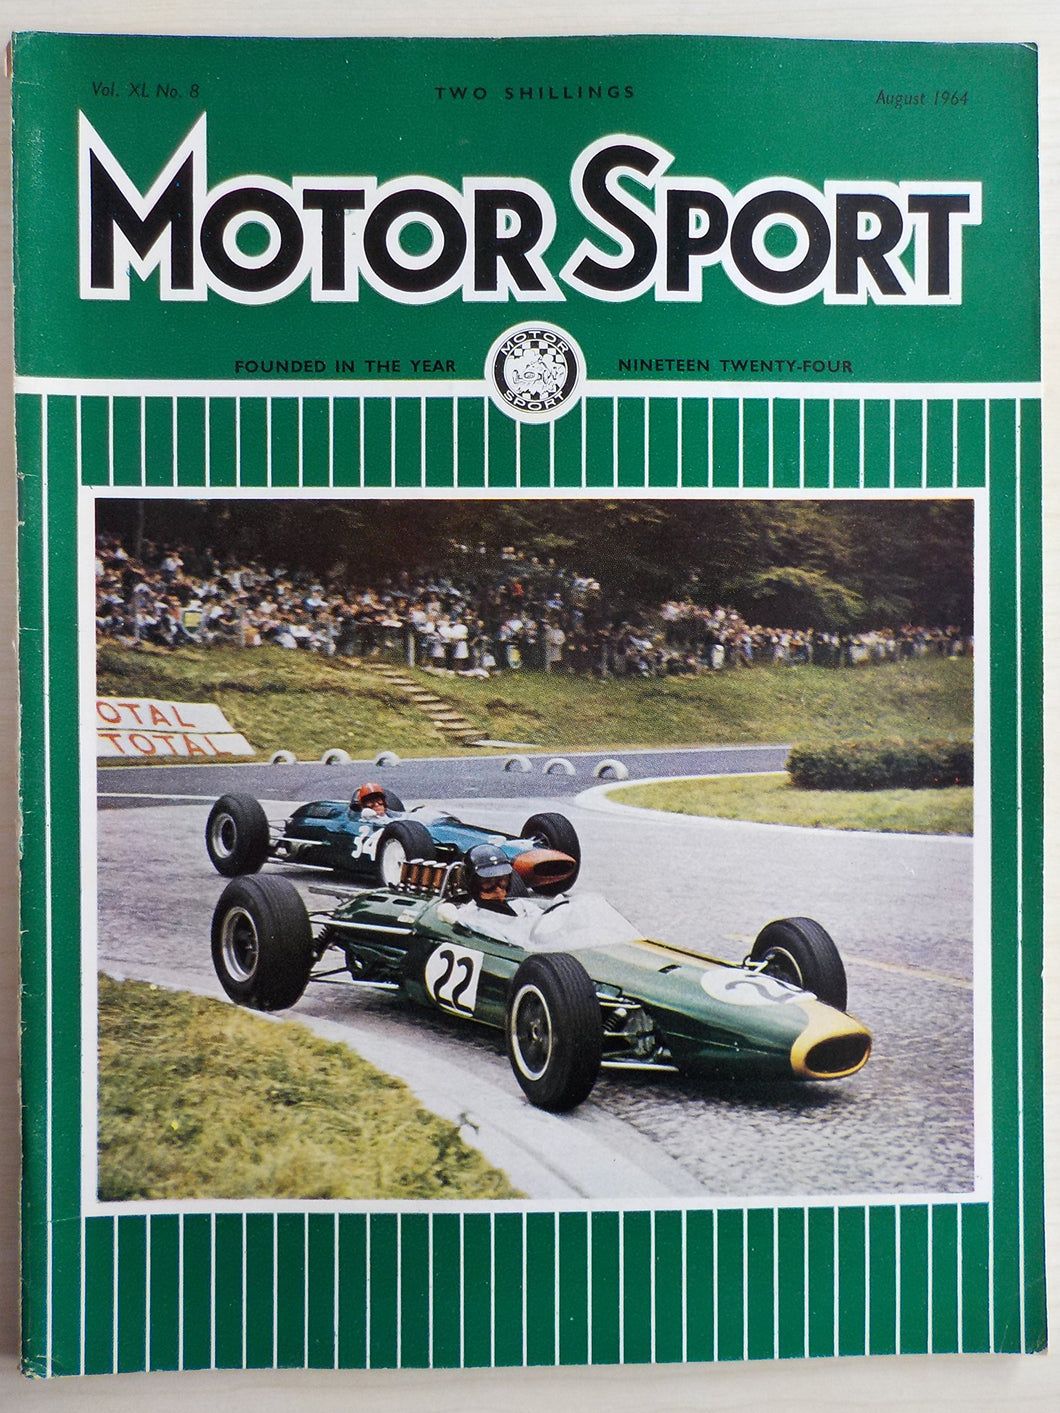 Motor Sport magazine Vol XL No 8 August 1964 [Paperback] William Boddy and Denis Jenkinson